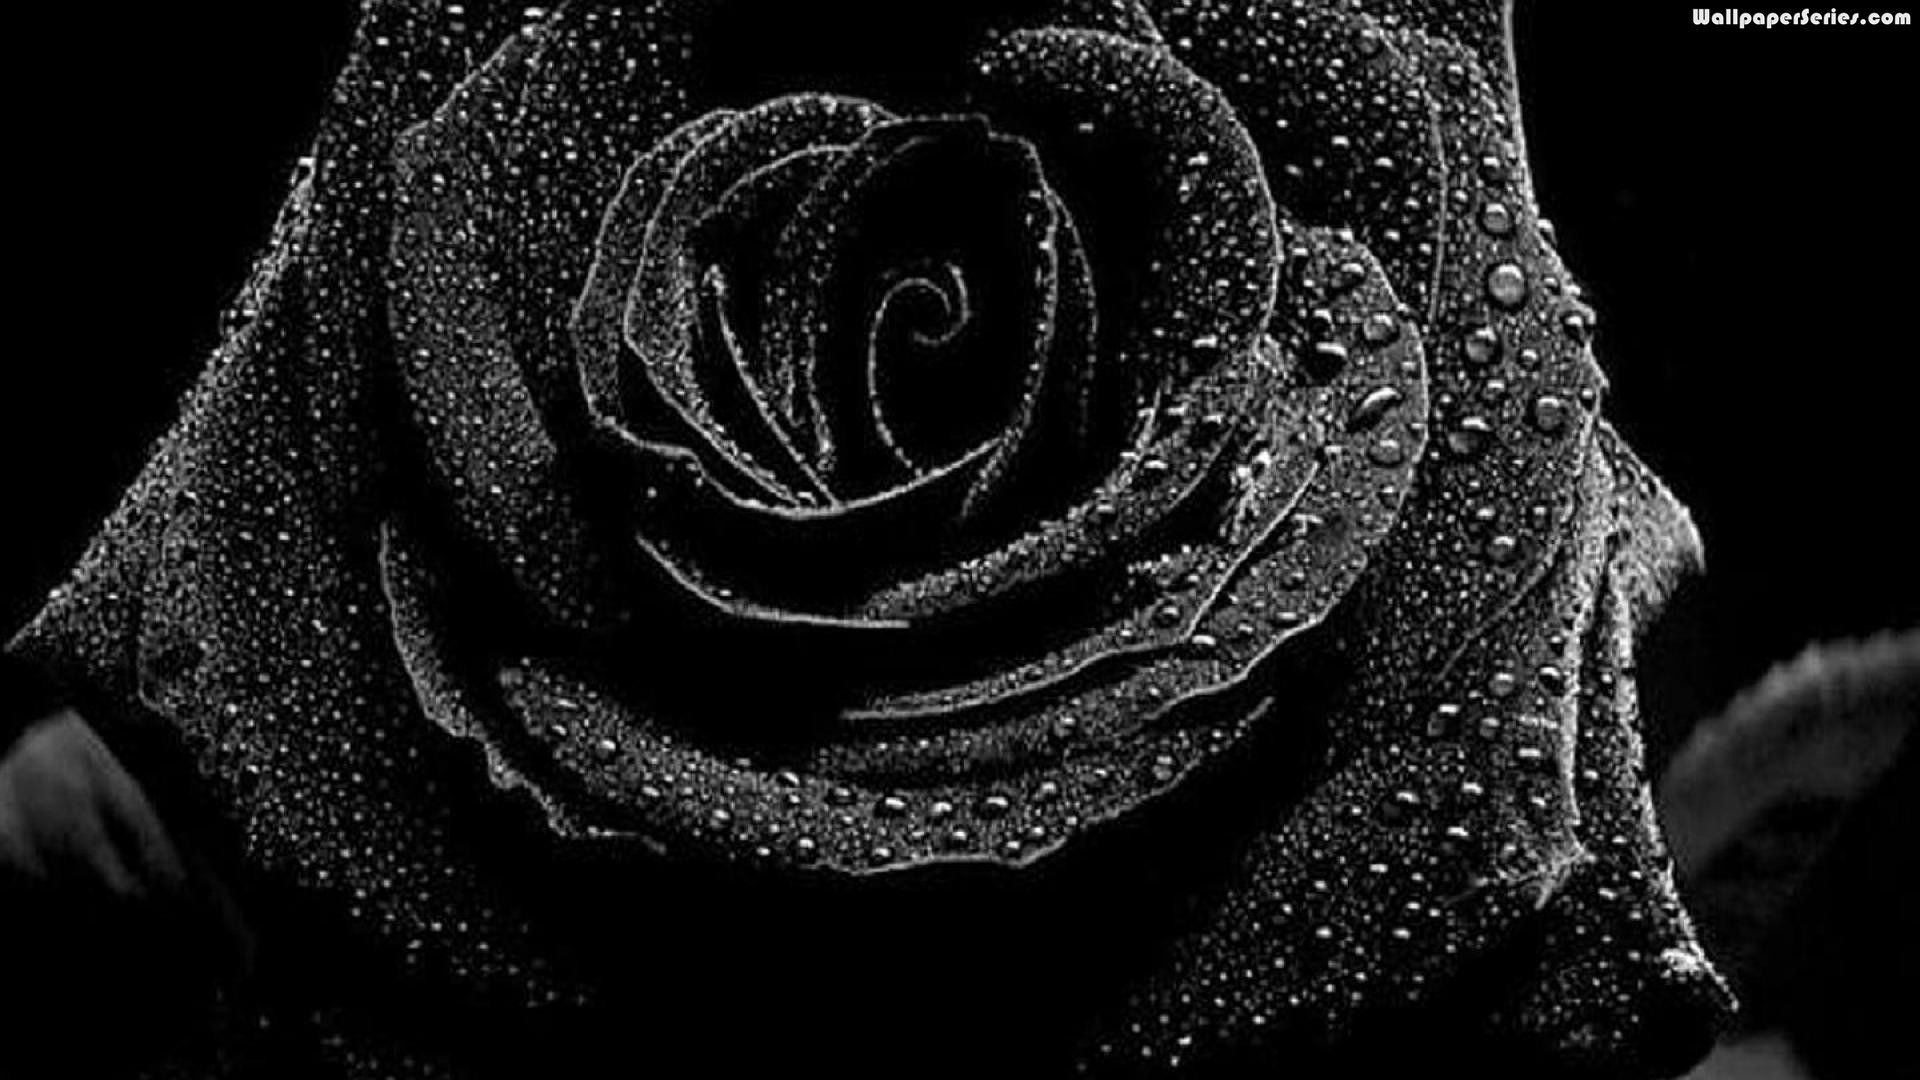 Free download Wallpaper Of Black Roses [1920x1080]